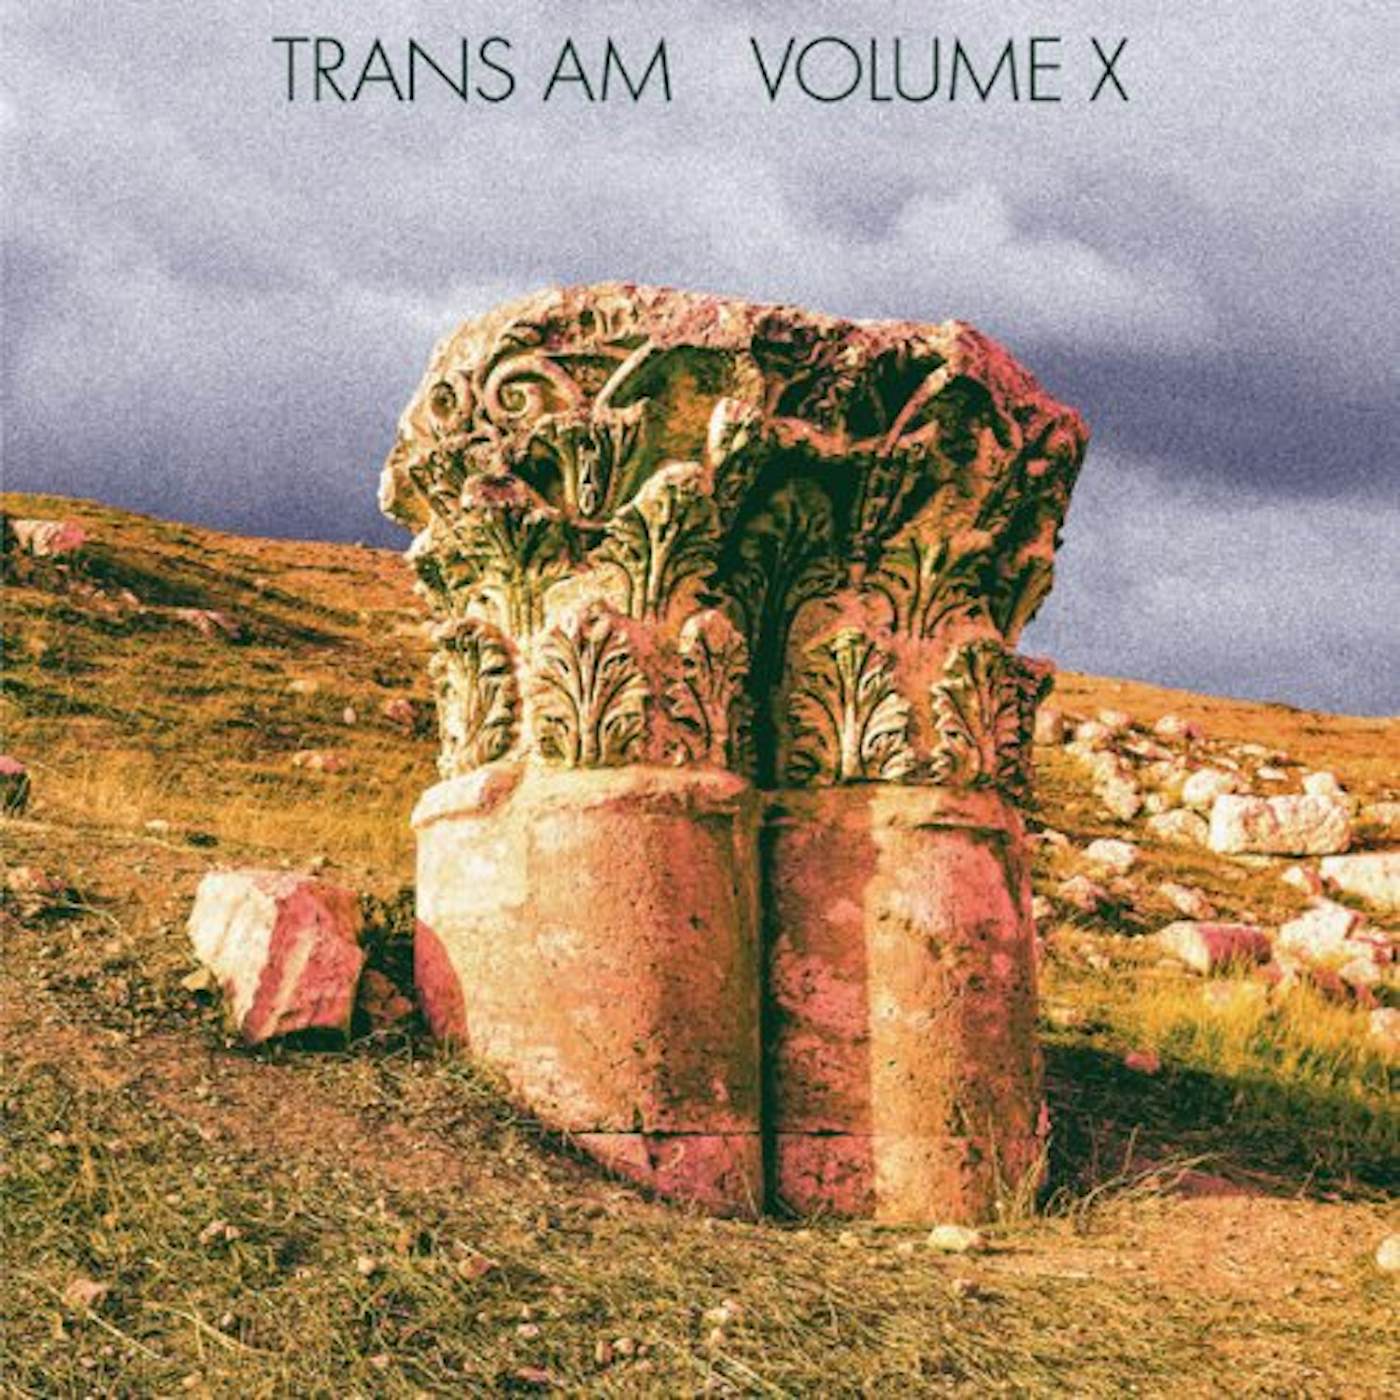 Trans Am Volume X Vinyl Record